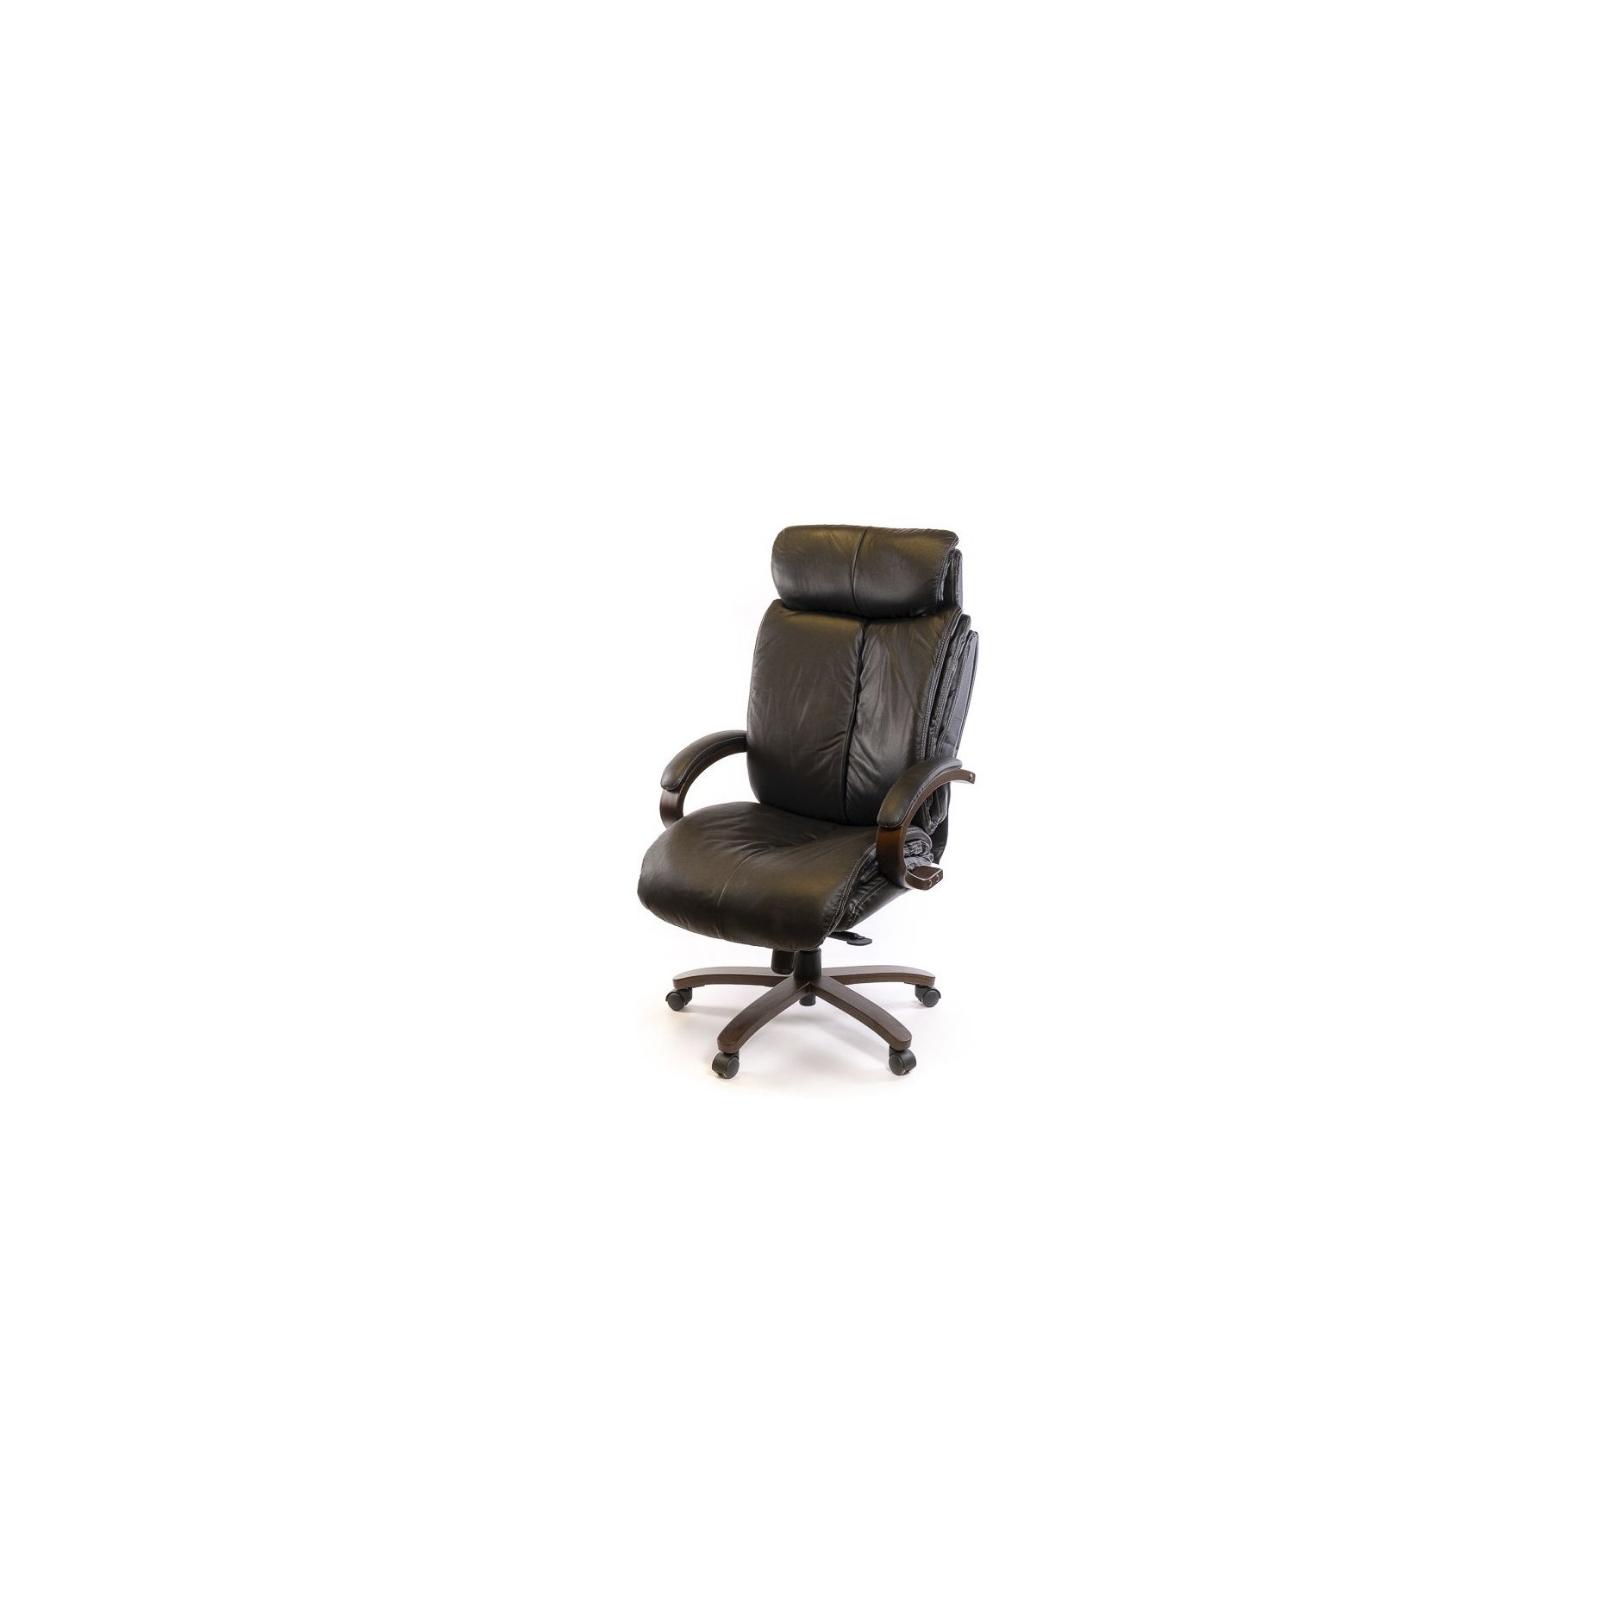 Офісне крісло Аклас Арізона Soft EX MB Чорне (00127078)